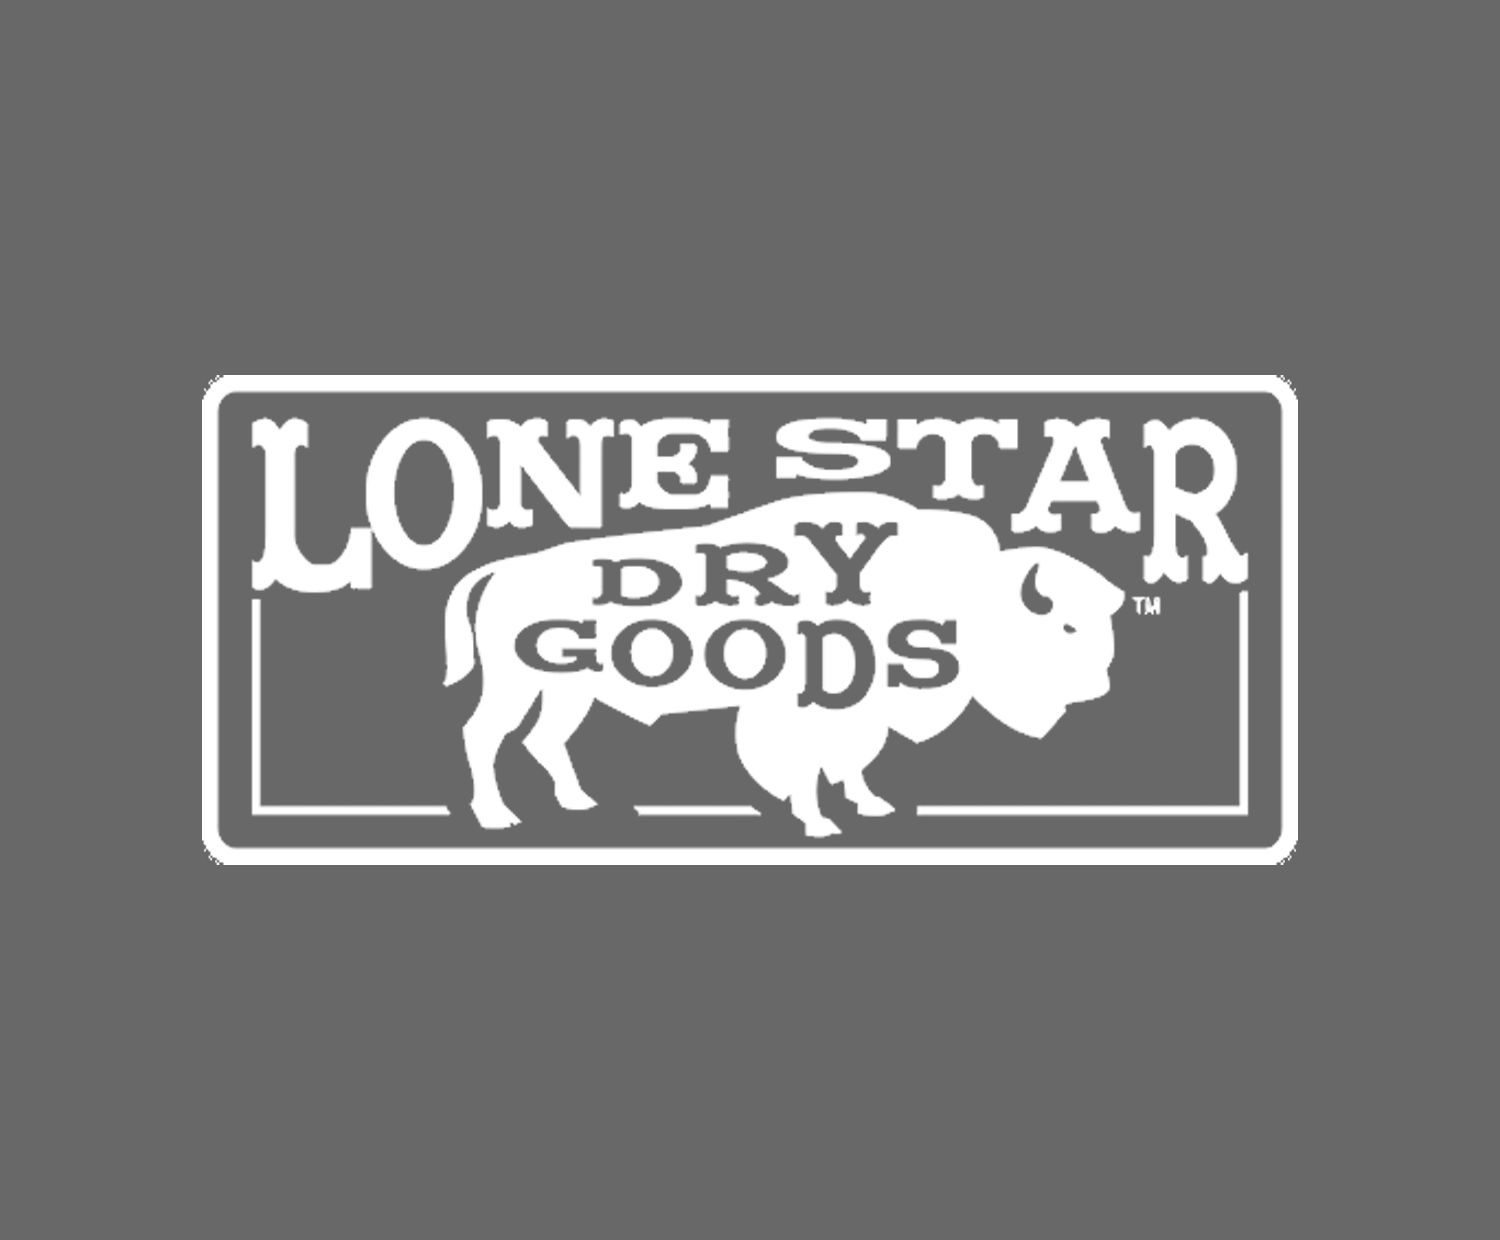 Lone Star Dry Goods